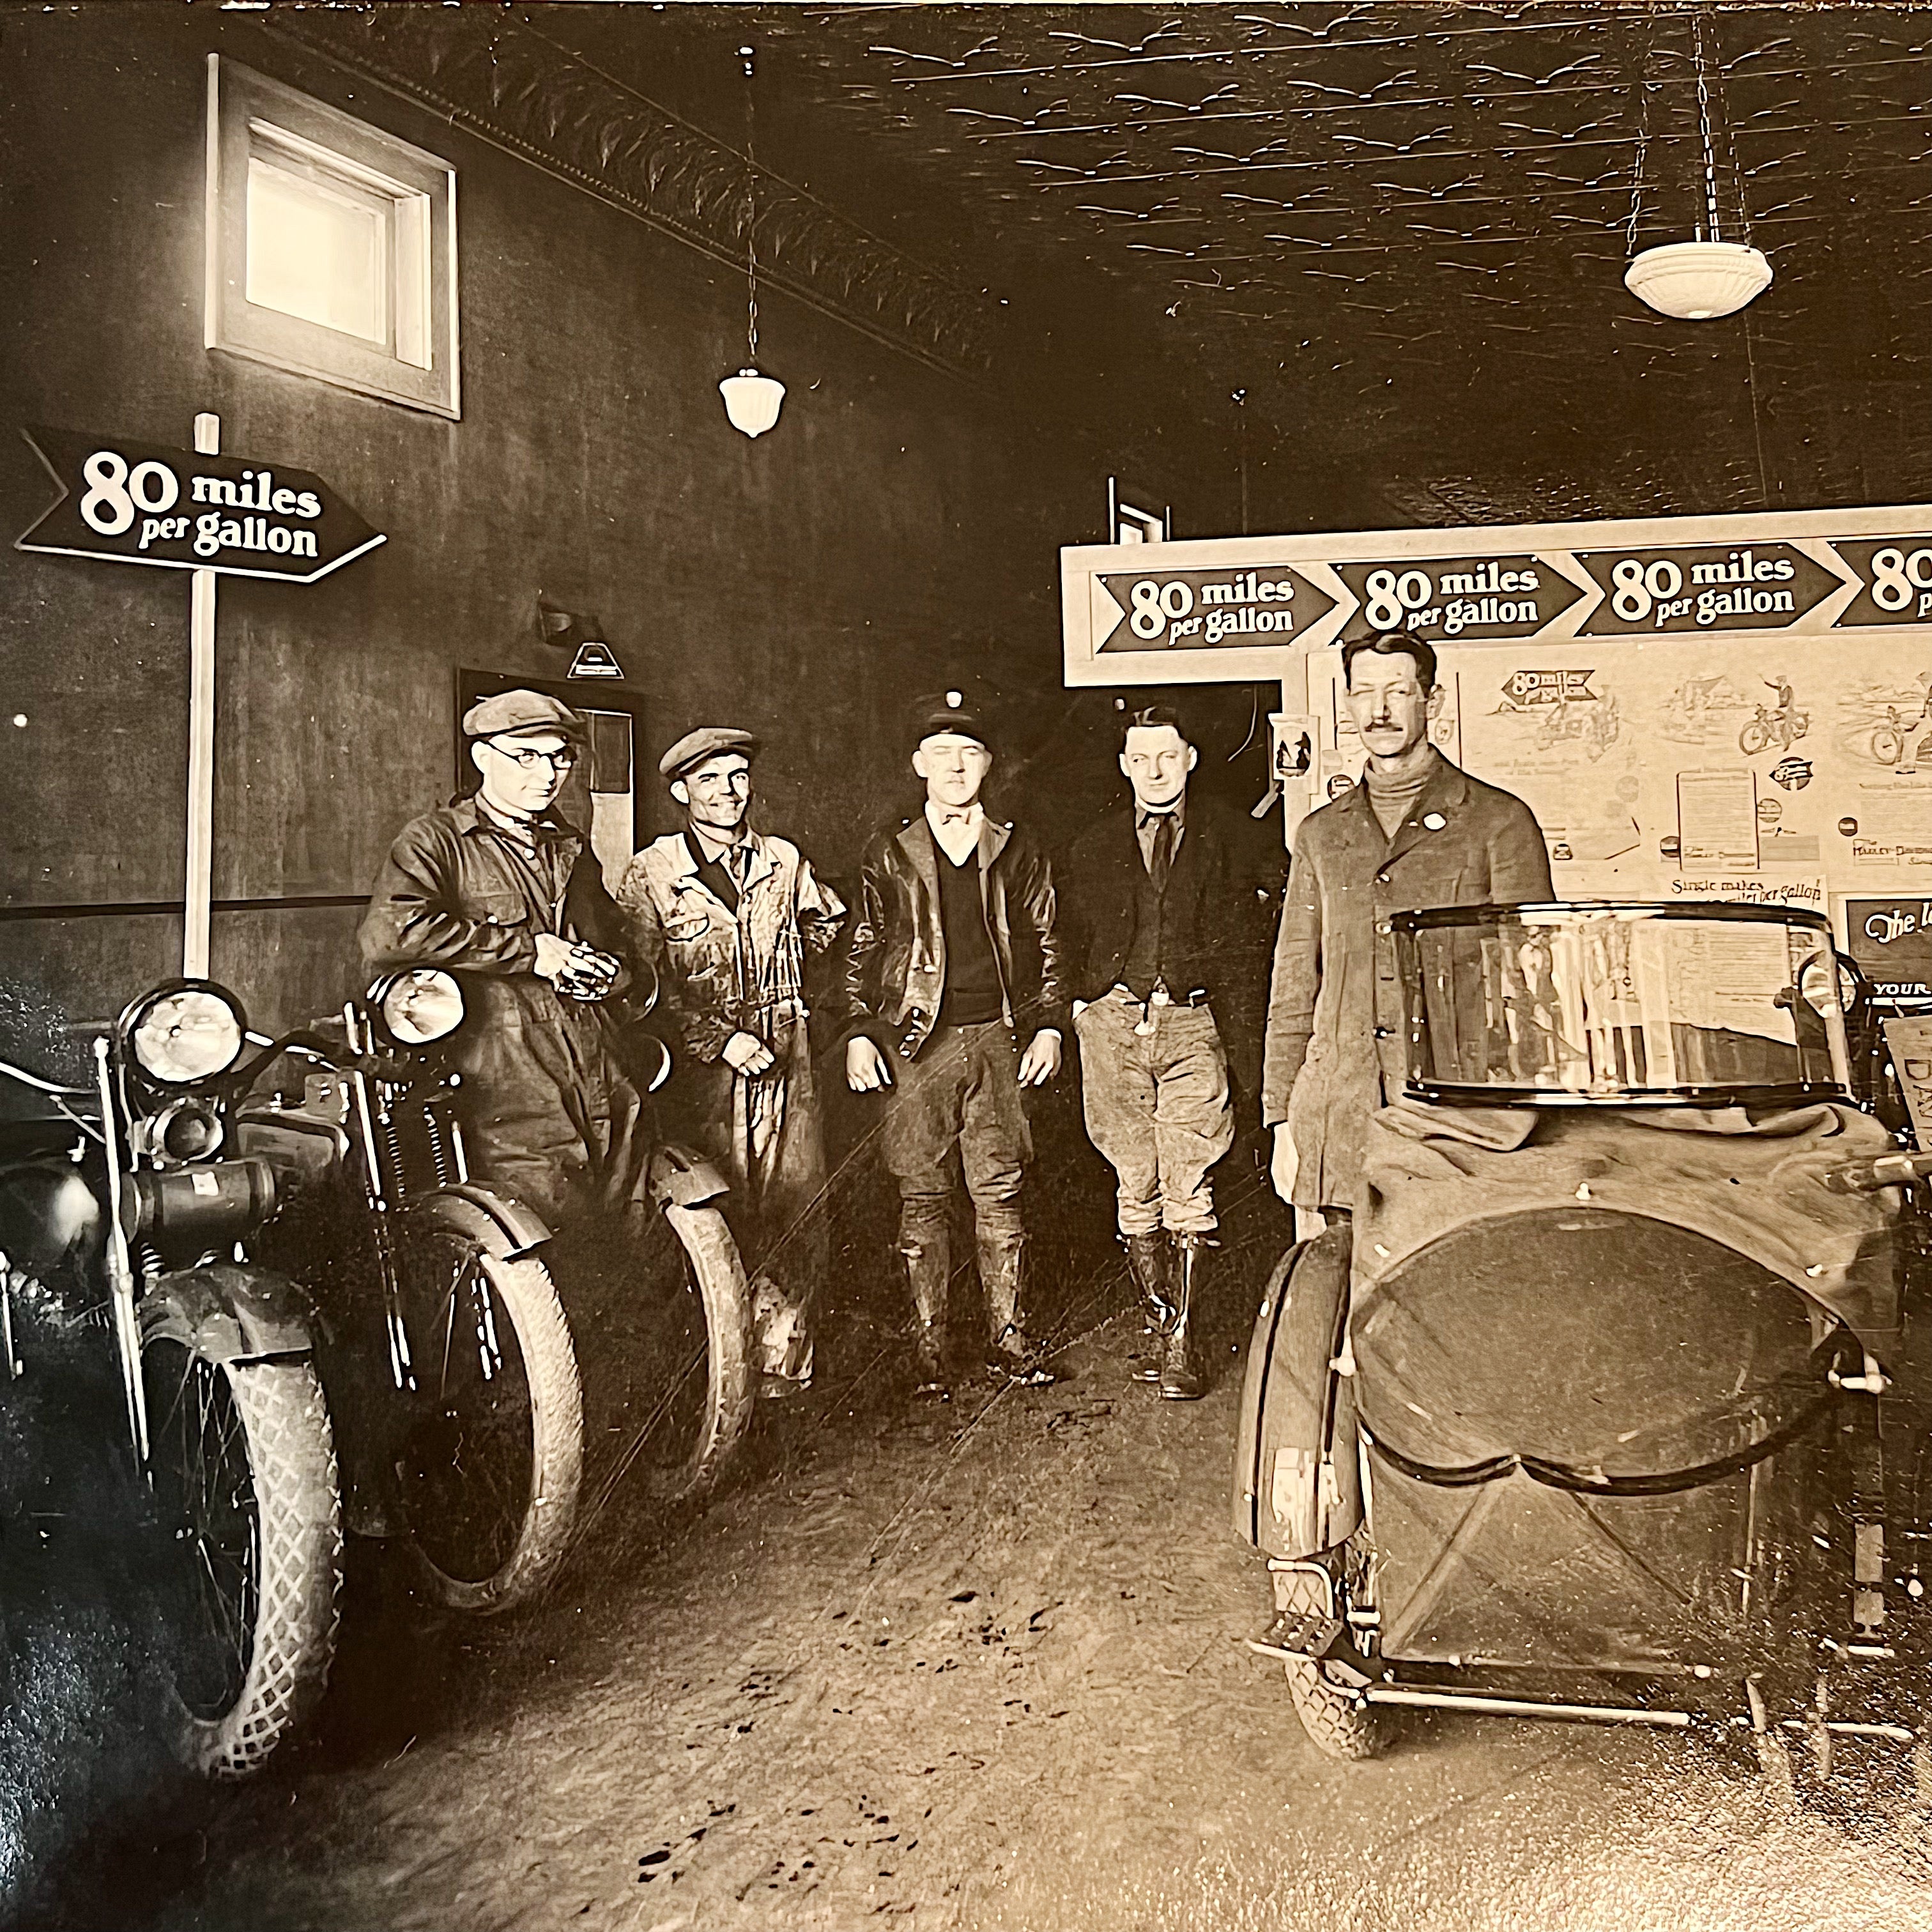 Antique Harley Davidson Dealer Photograph from 1920s Minneapolis - Rare Interior Motorcycle Shop Photography - 80 Miles Per Gallon Advert